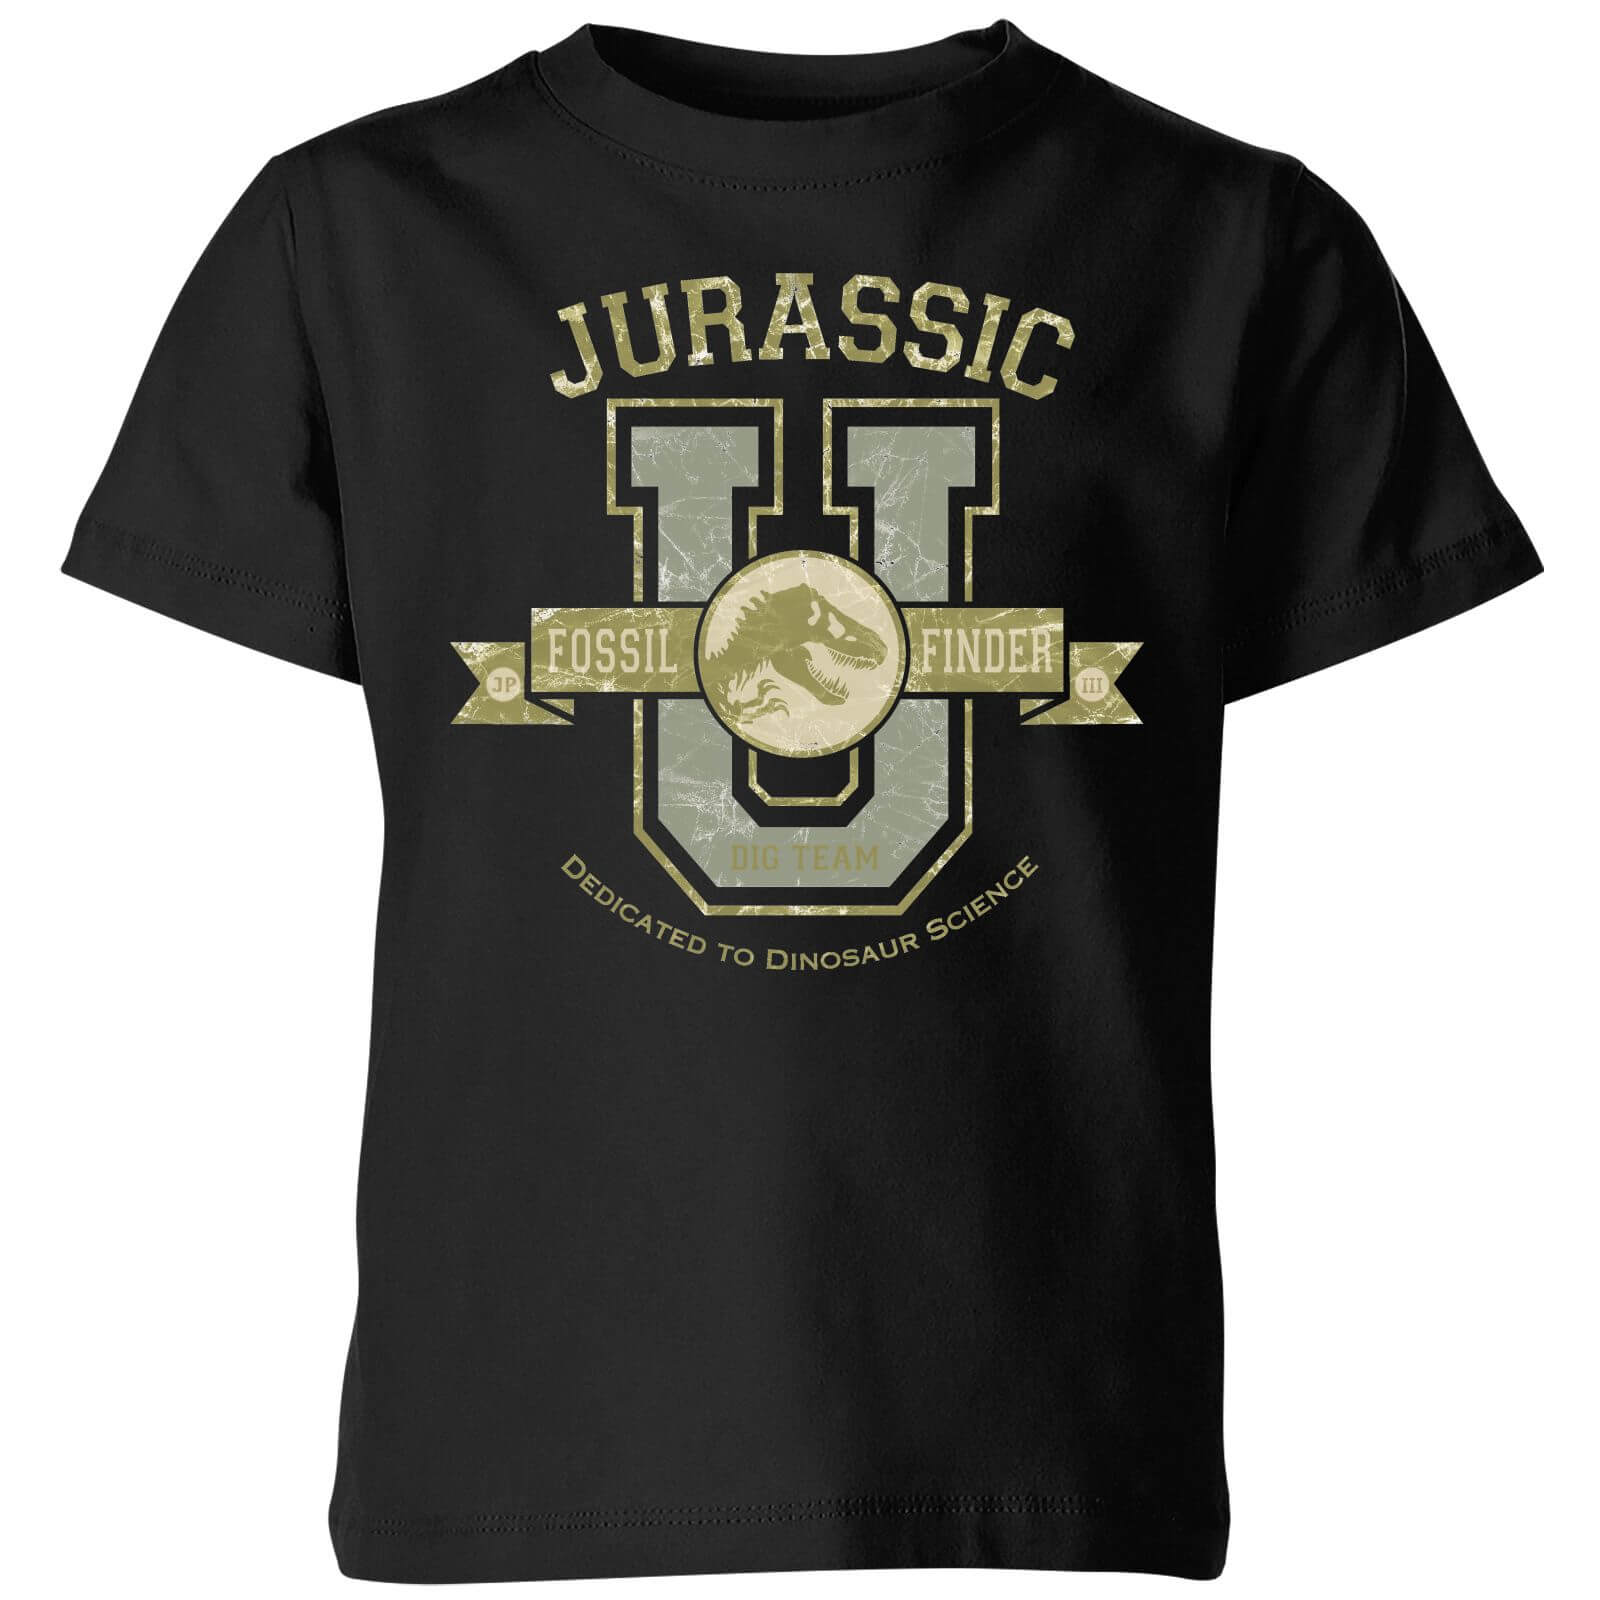 Jurassic Park Fossil Finder Kids' T-Shirt - Black - 3-4 Years - Black